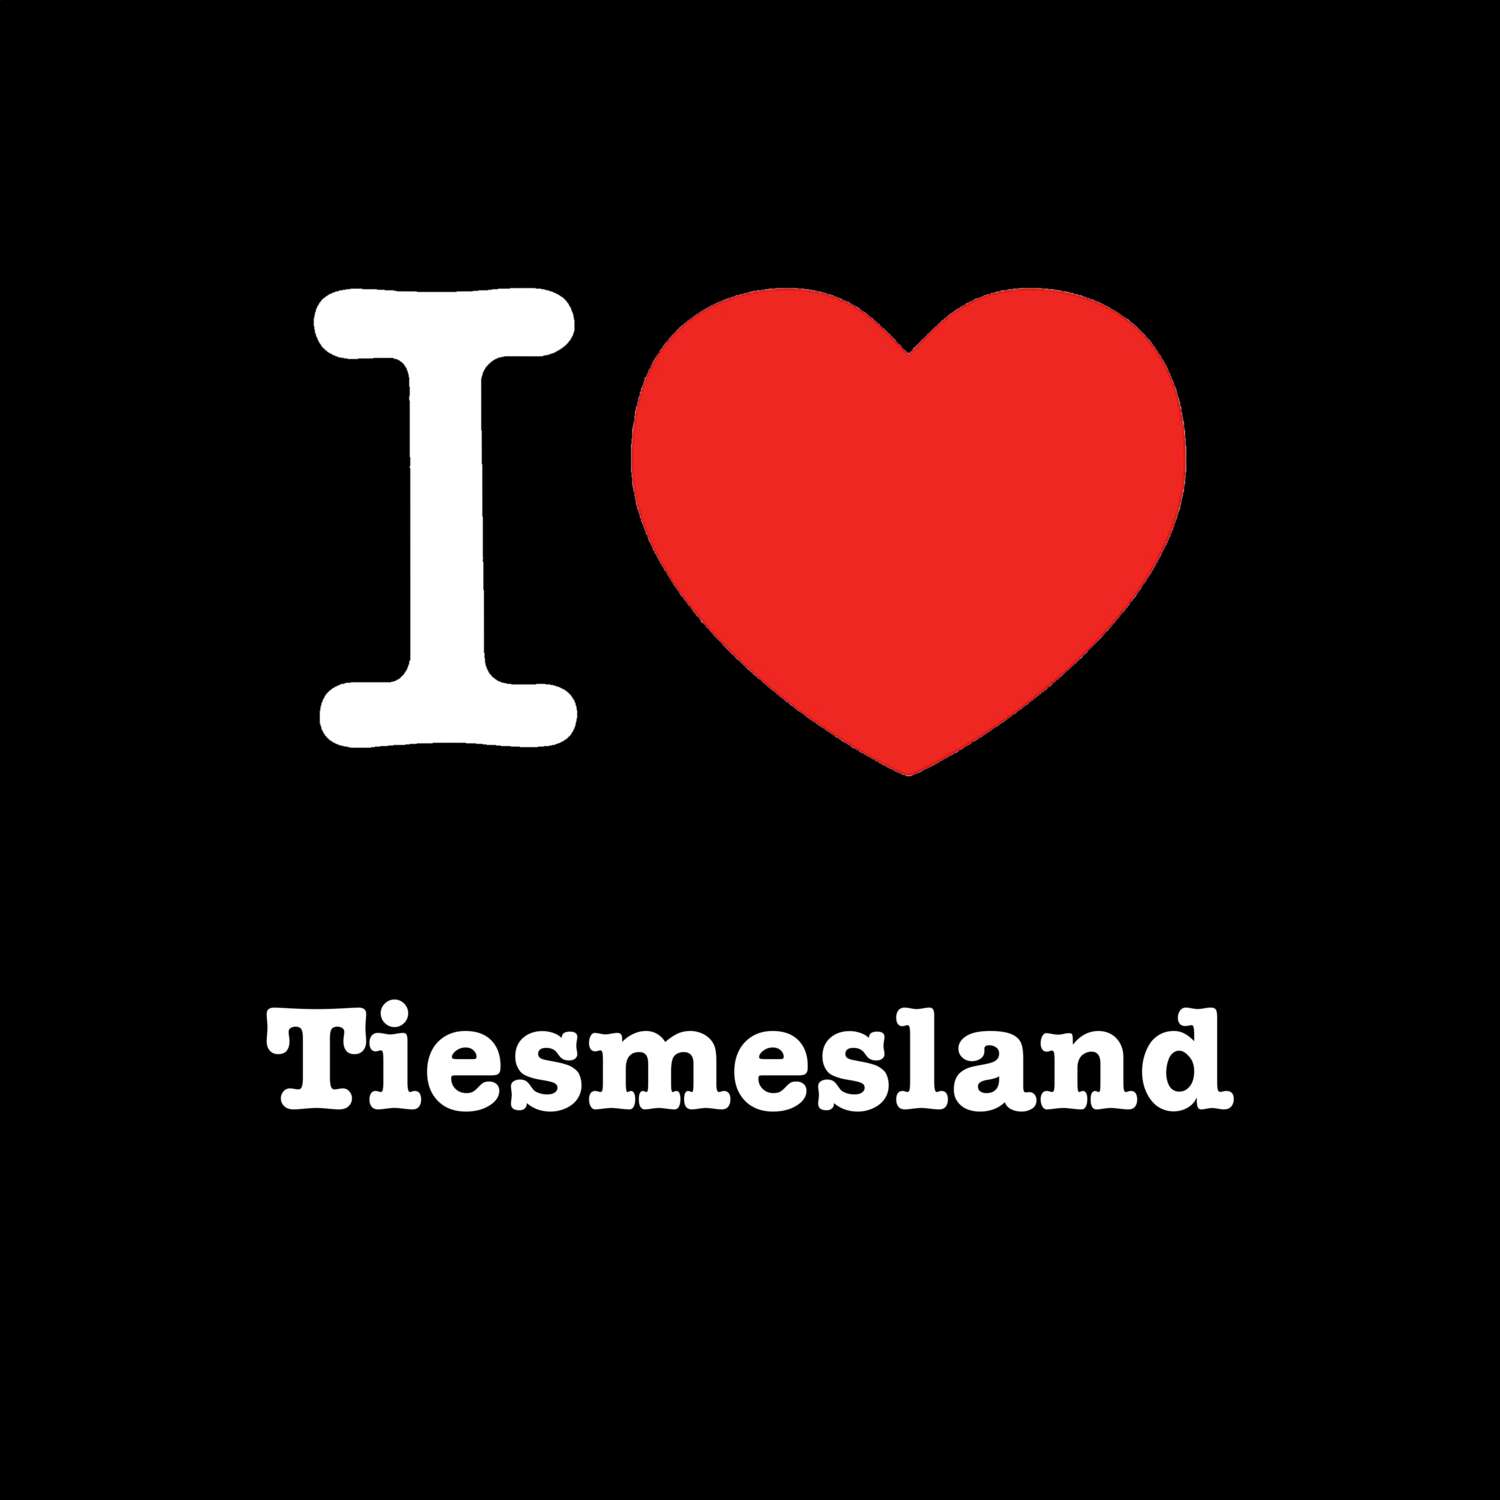 Tiesmesland T-Shirt »I love«